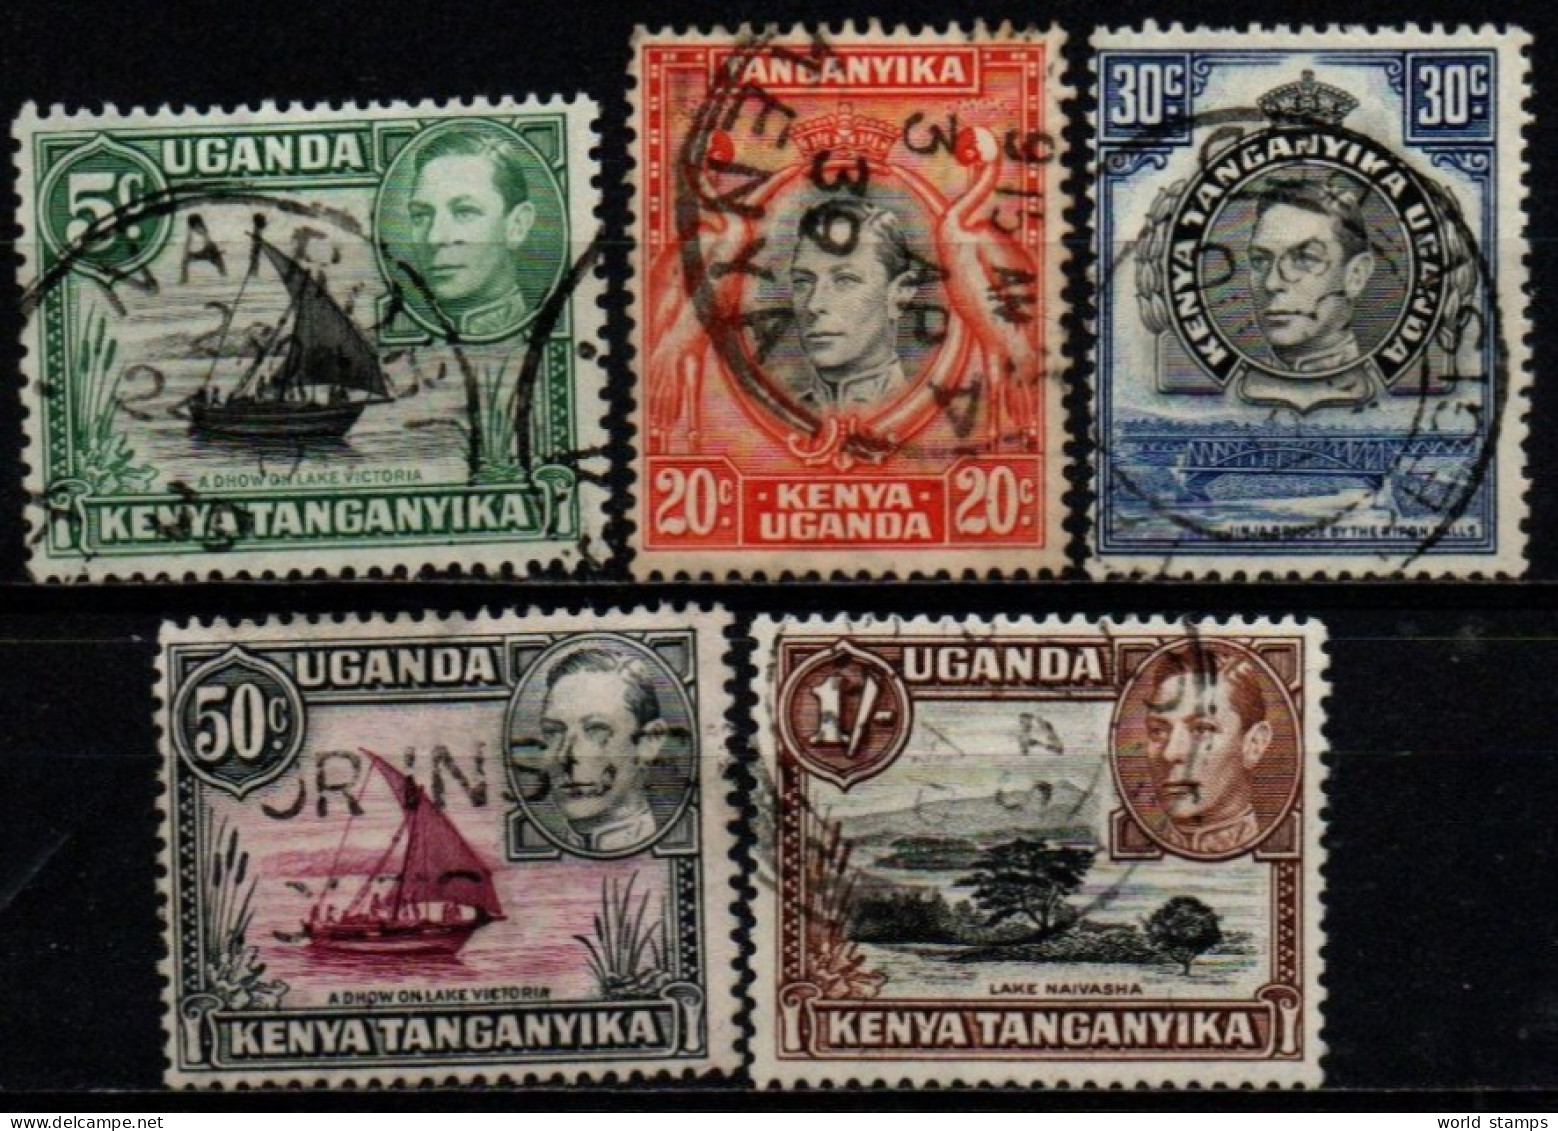 K.U.T. 1938 O - Kenya, Ouganda & Tanganyika